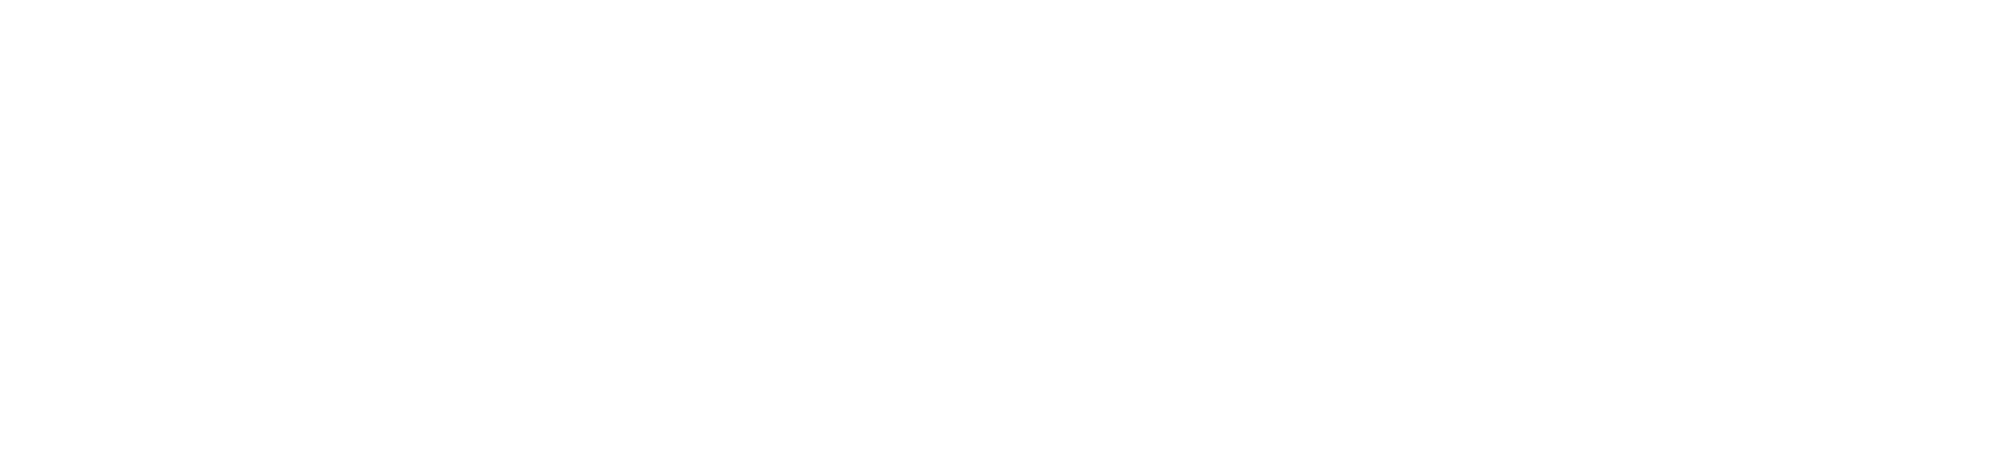 PorterLogic logo